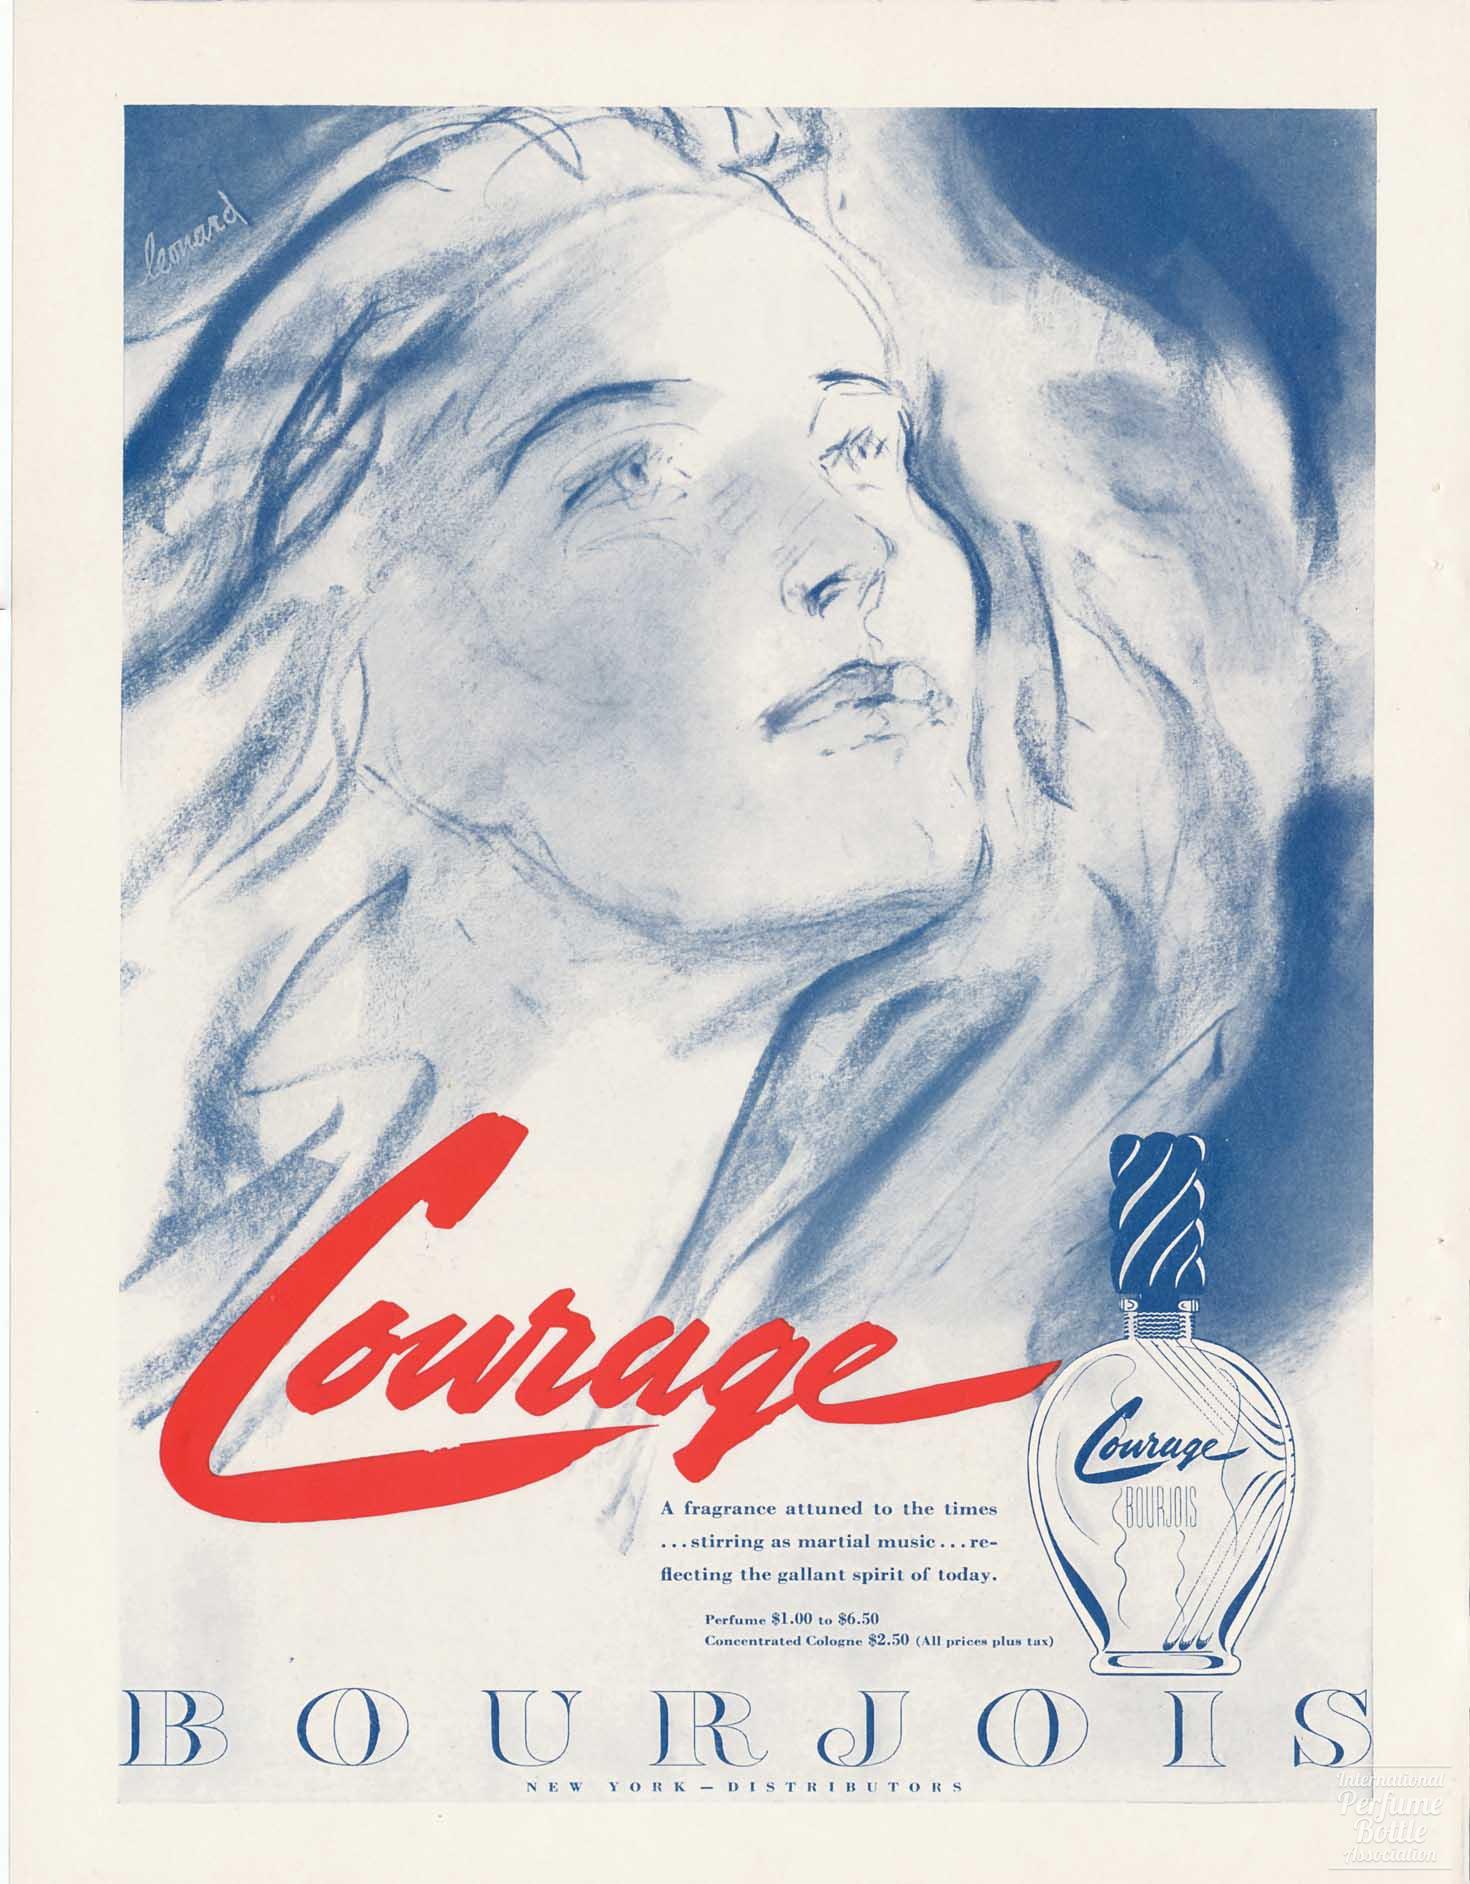 "Courage" by Bourjois Advertisement - 1942